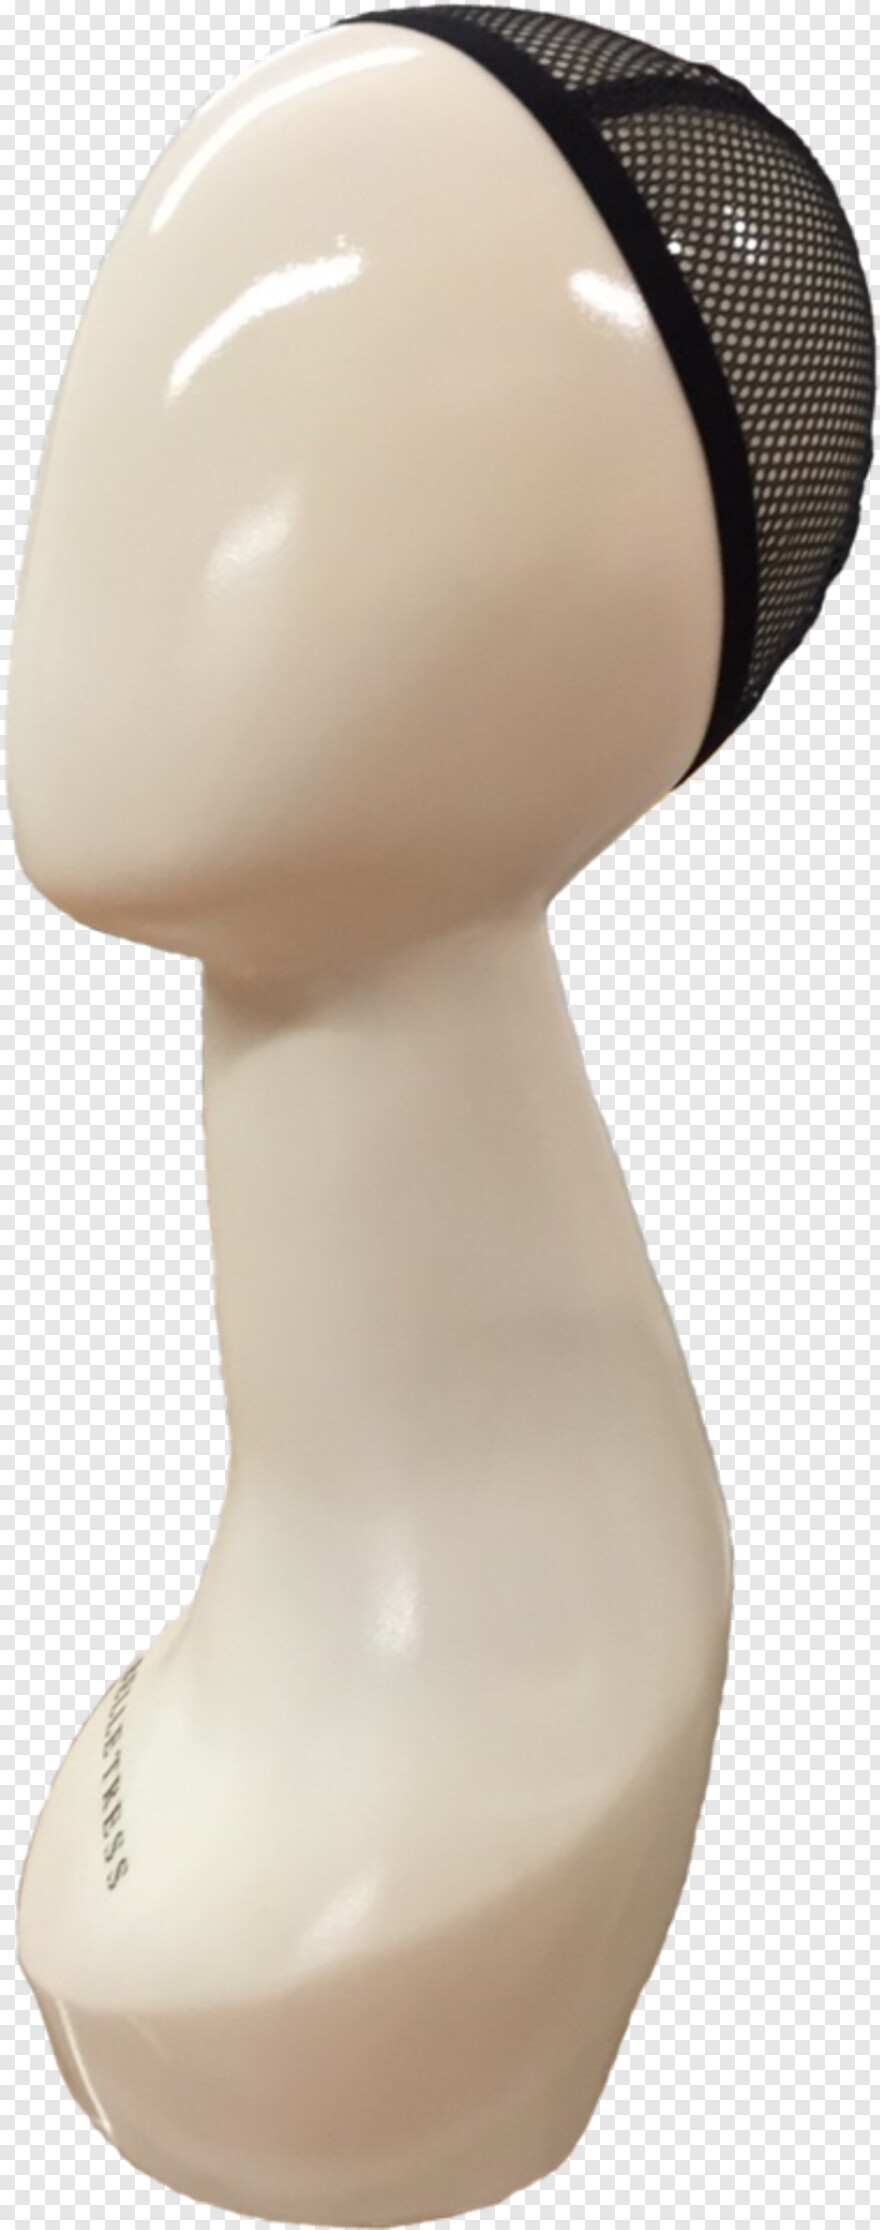 mannequin-head # 871799